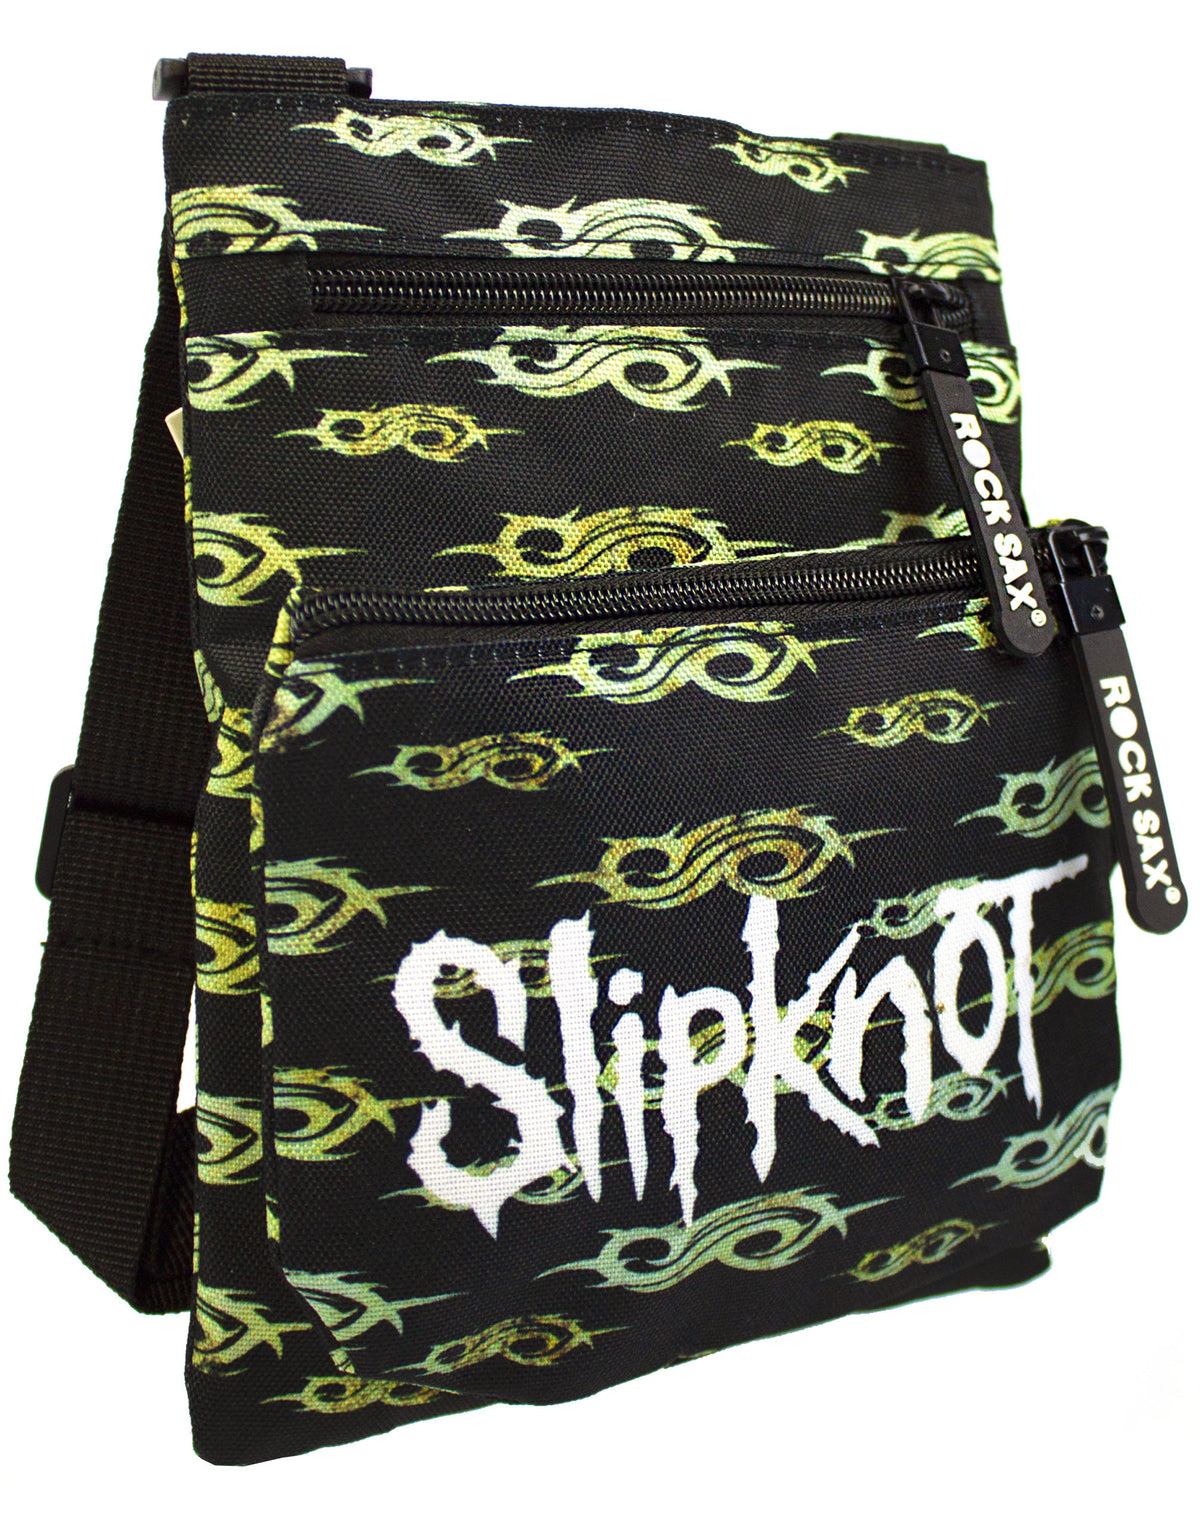 Slipknot Accessories Bag | spacelord's Artist Shop